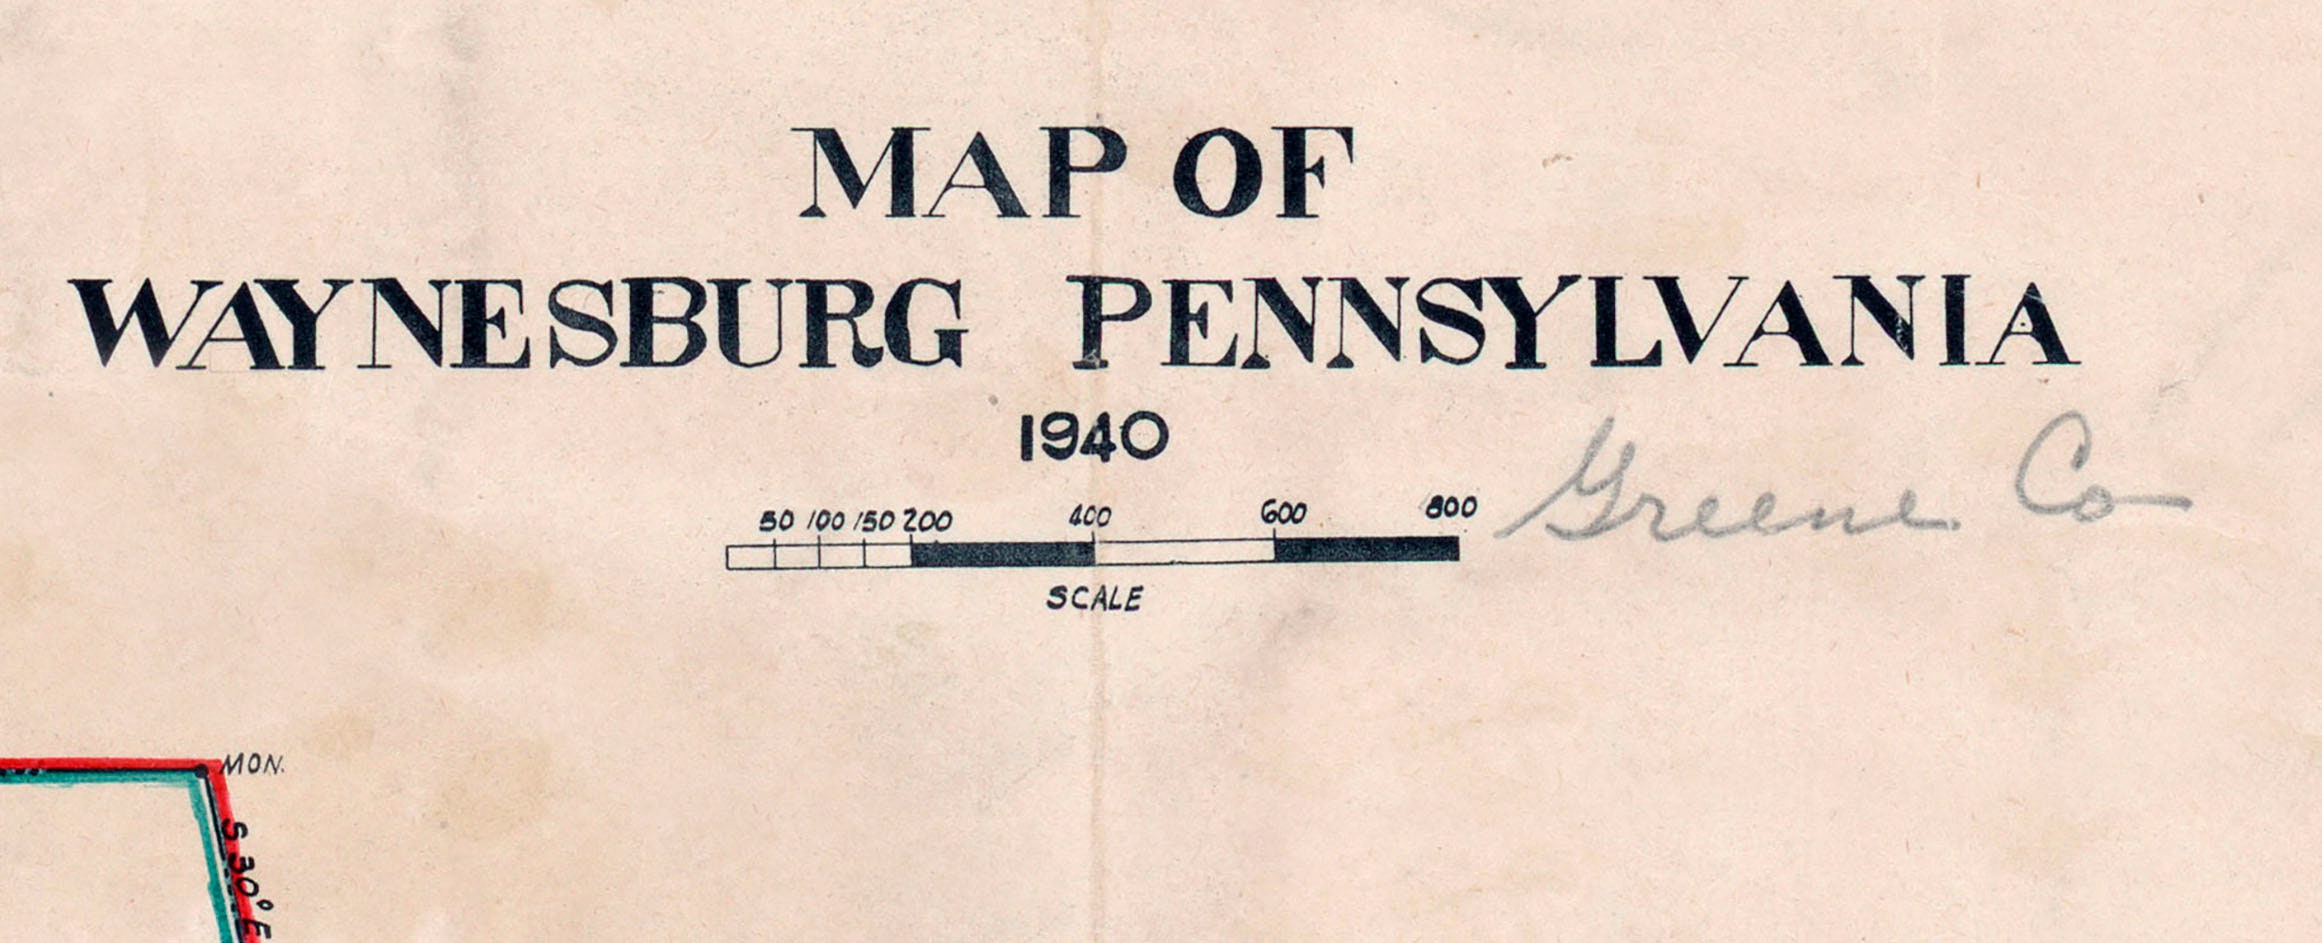 1940 Map of Waynesburg Greene County Pennsylvania image